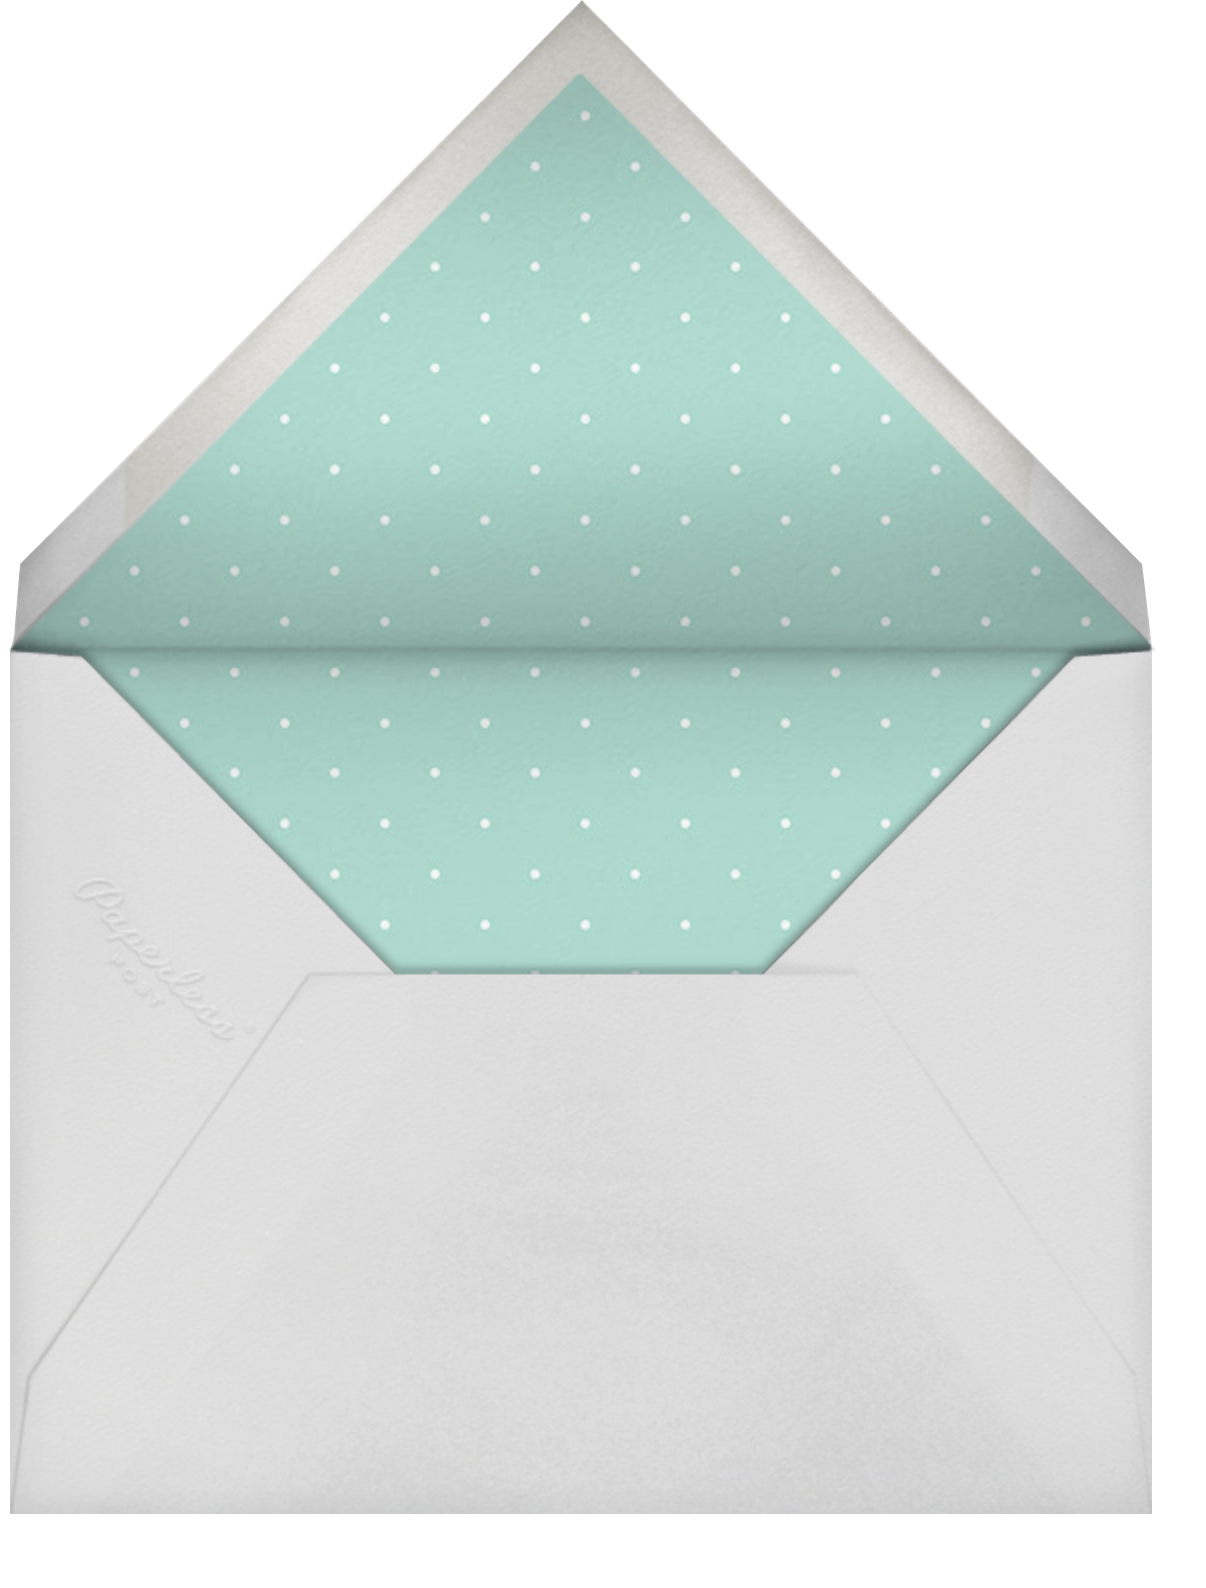 Bobbin (Engagement) - Lagoon - Paperless Post - Envelope